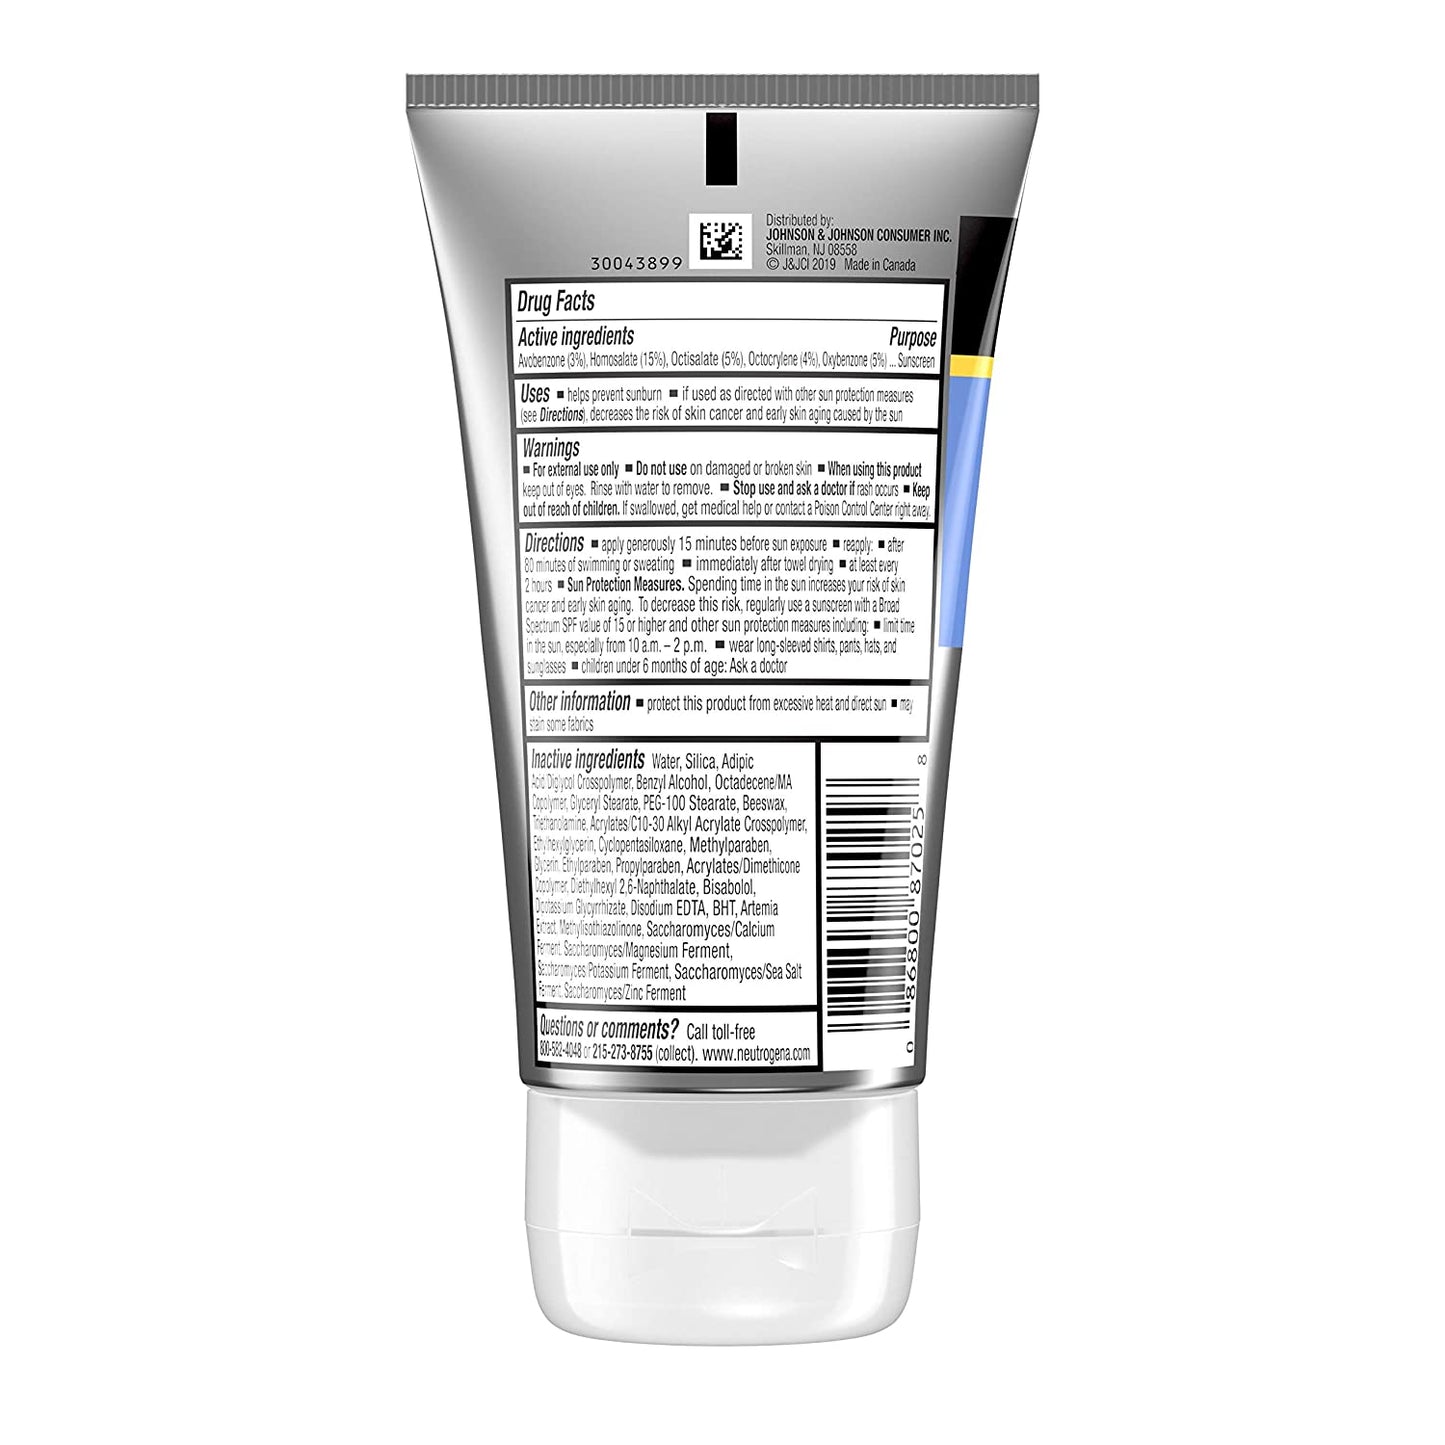 Neutrogena Sport Face Oil-Free Lotion Sunscreen Broad Spectrum SPF 70+, 2.5 fl.oz / 73ml